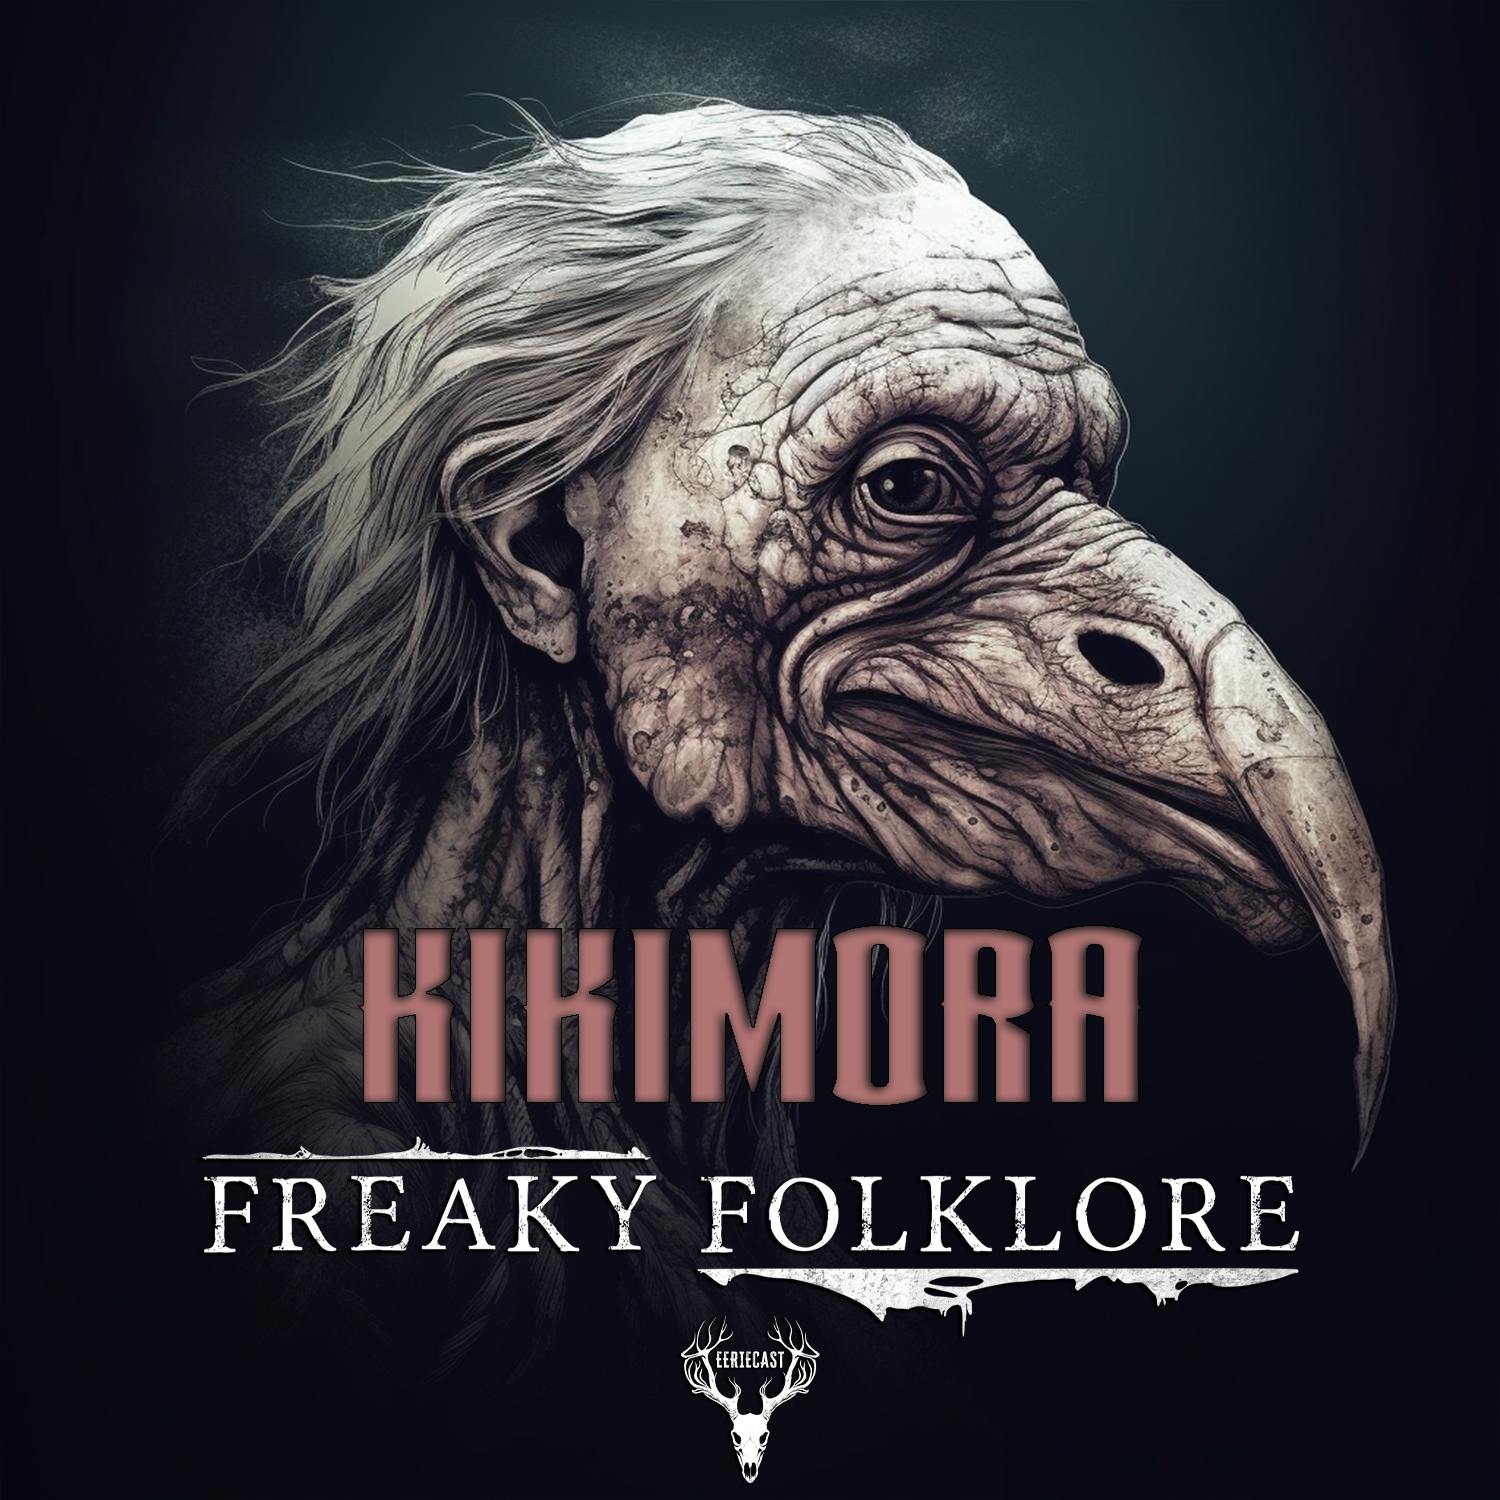 Kikimora - A Wicked House Spirit From Slavic Folklore